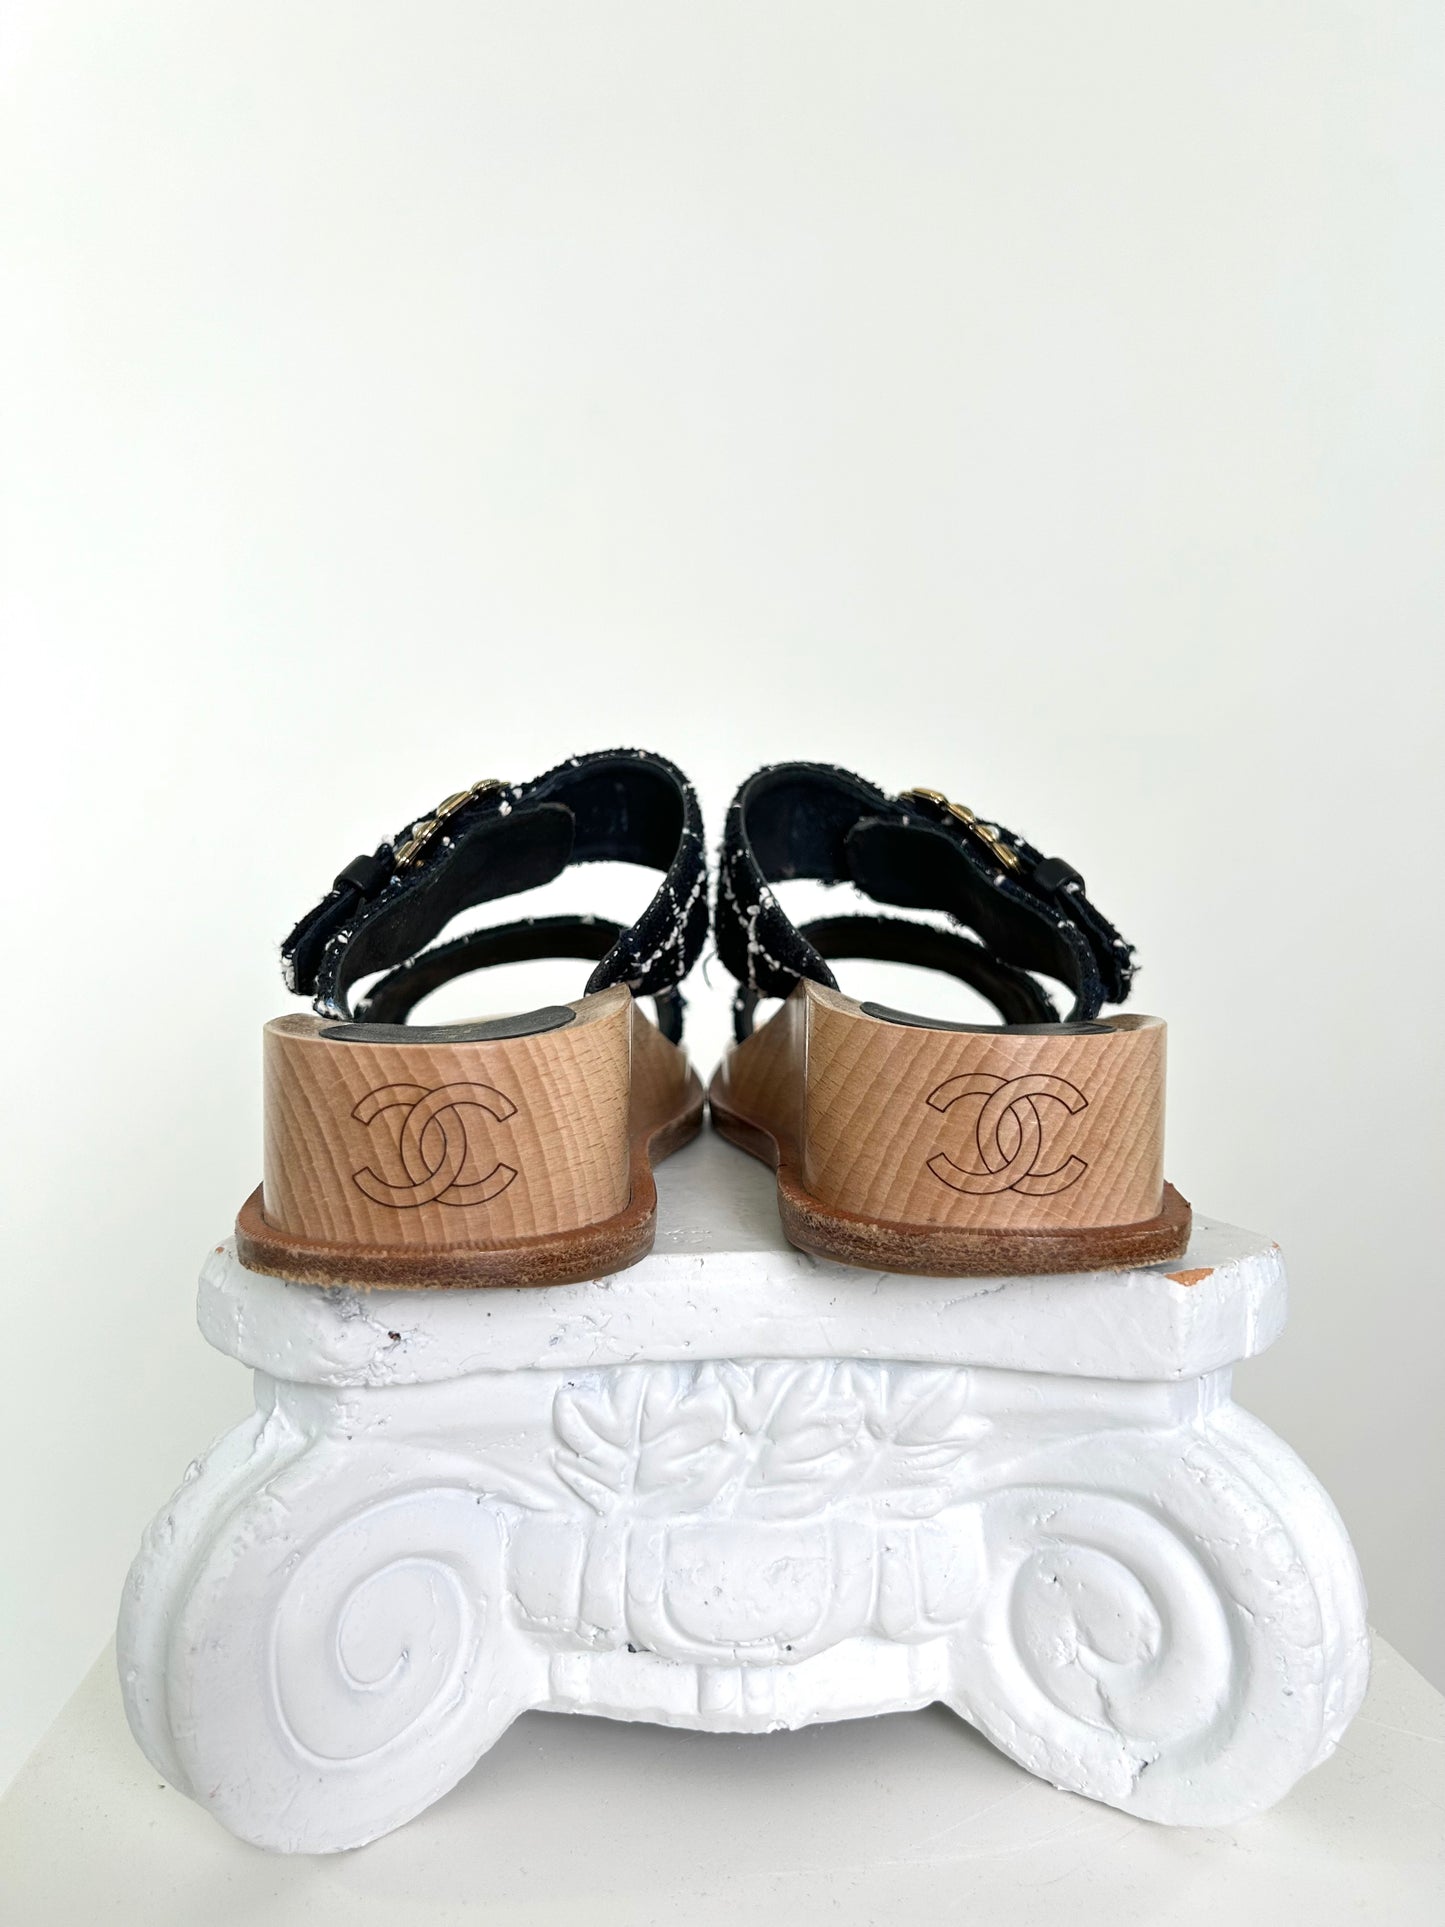 Chanel Black and White Sandal